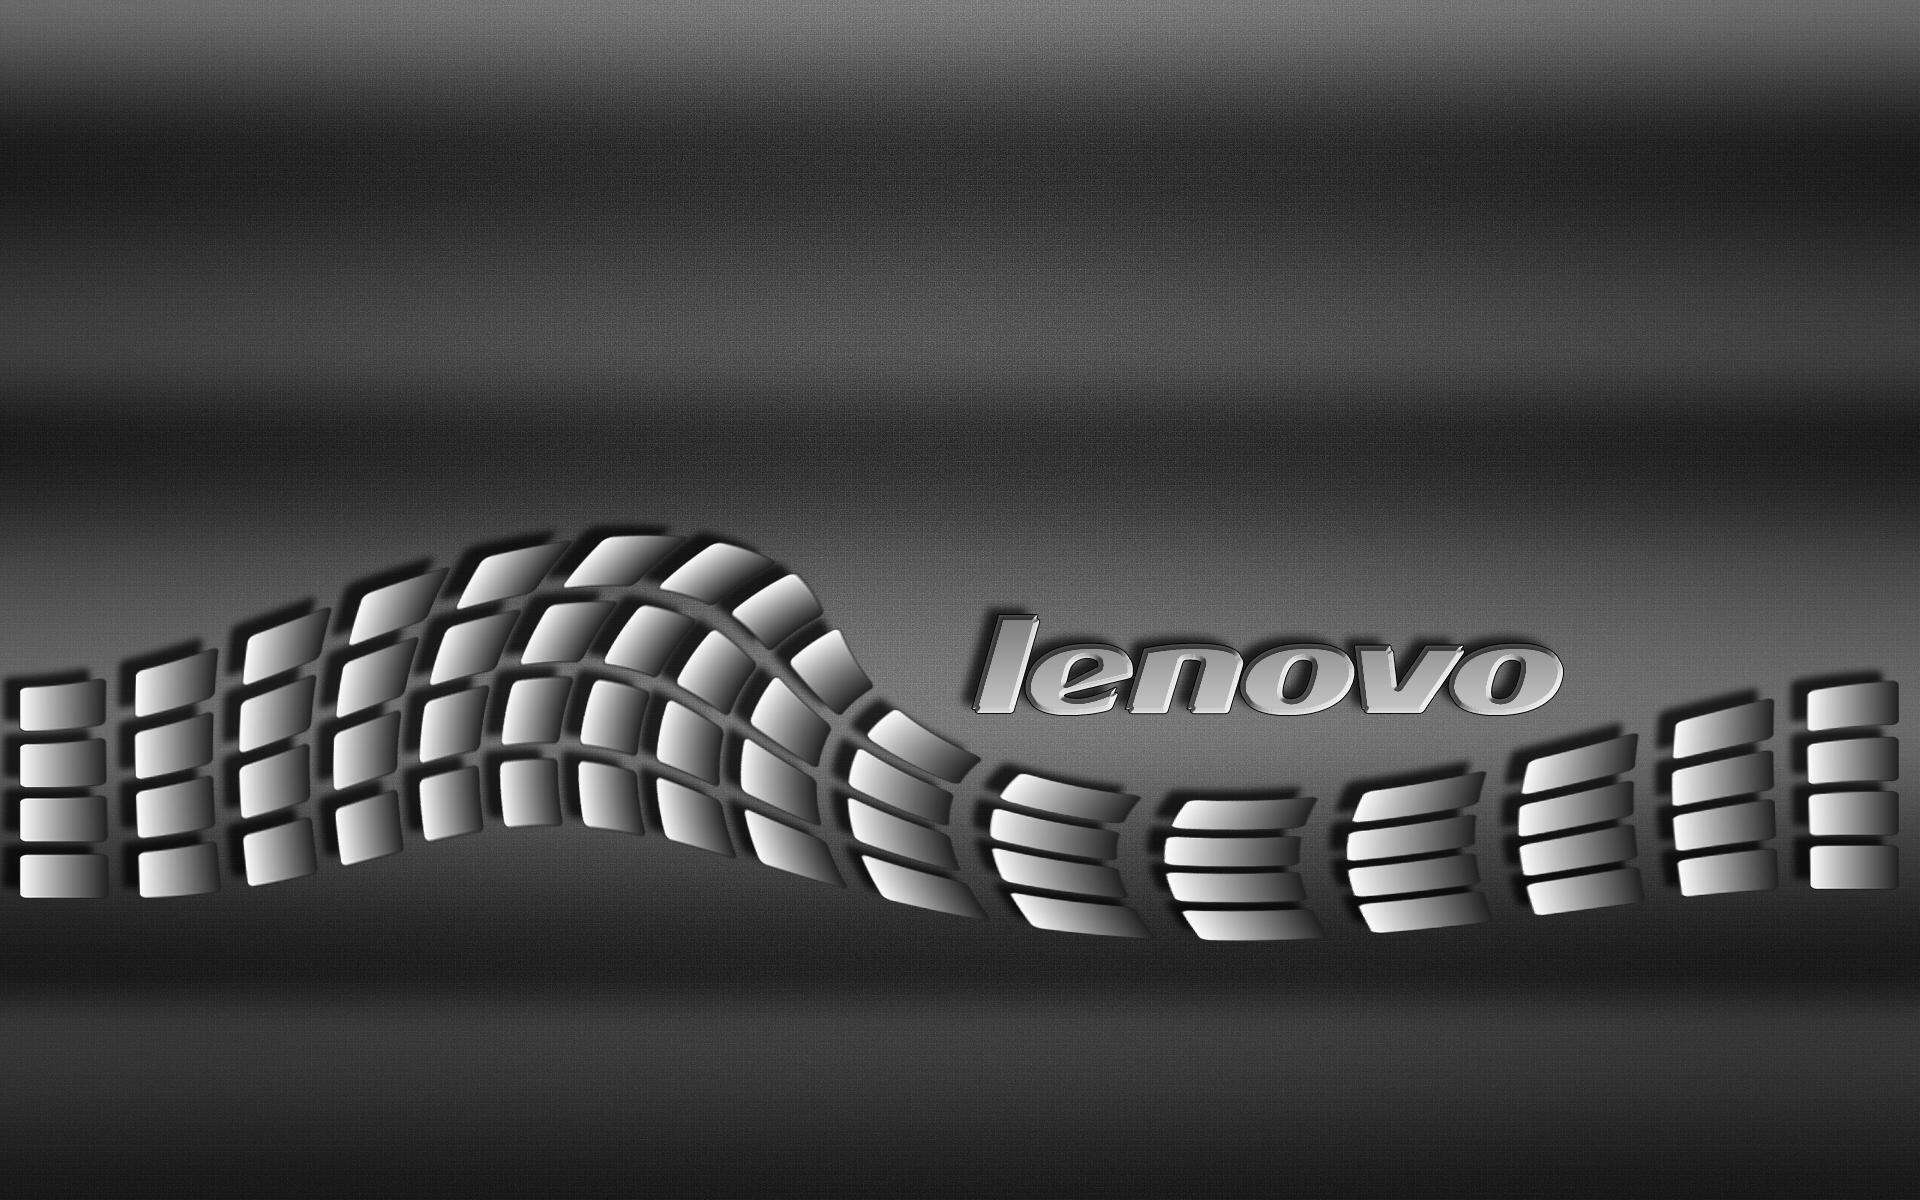 48+] Lenovo HD Wallpapers - WallpaperSafari